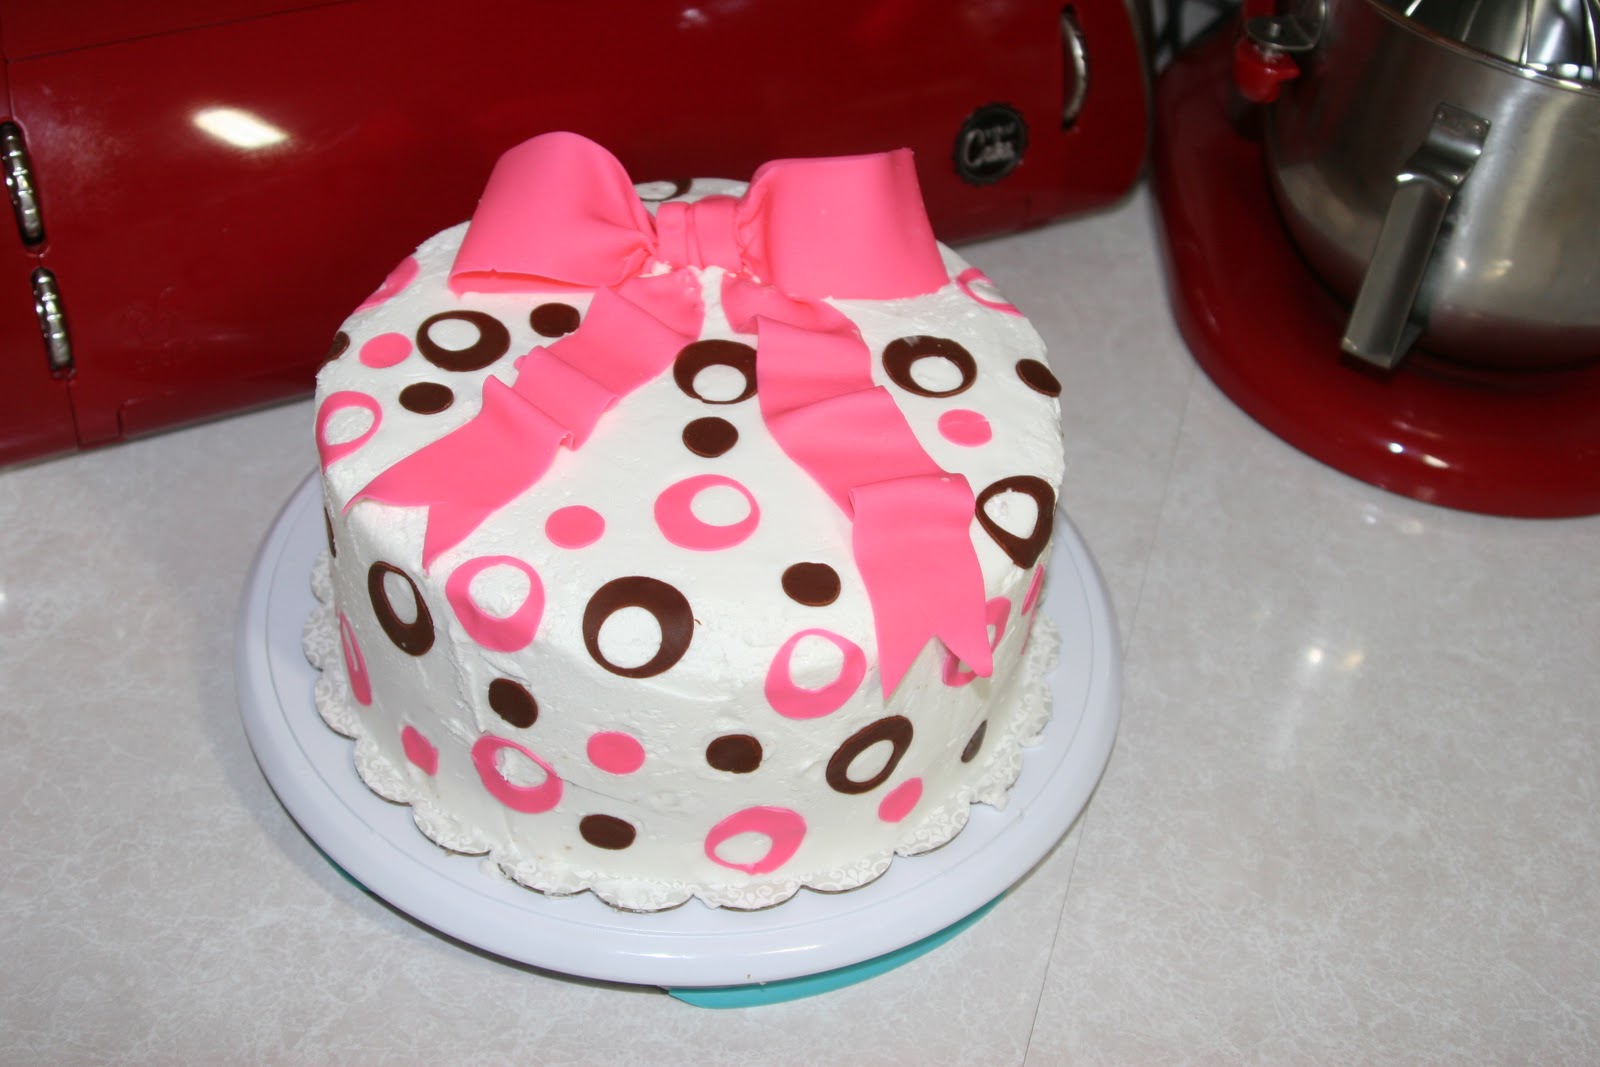 30th birthday cake ideas for husband - A Birthday Cake